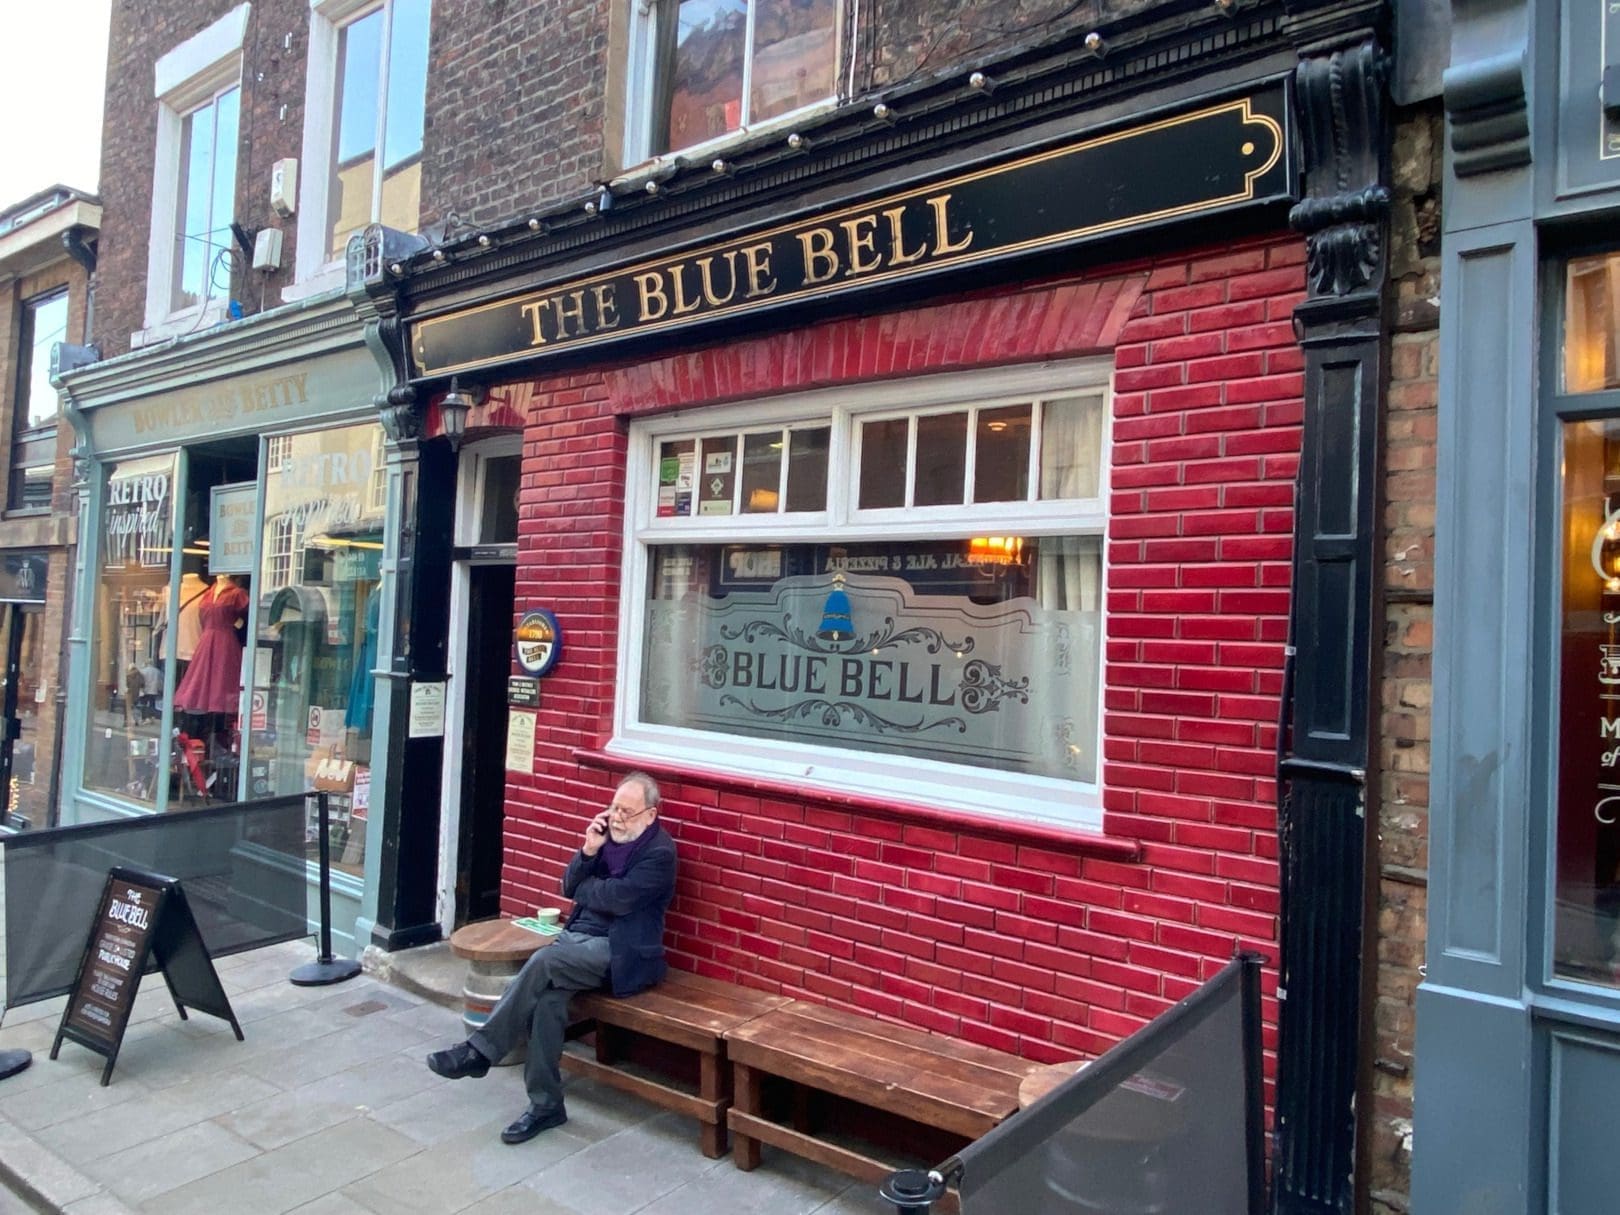 The smallest pub in York